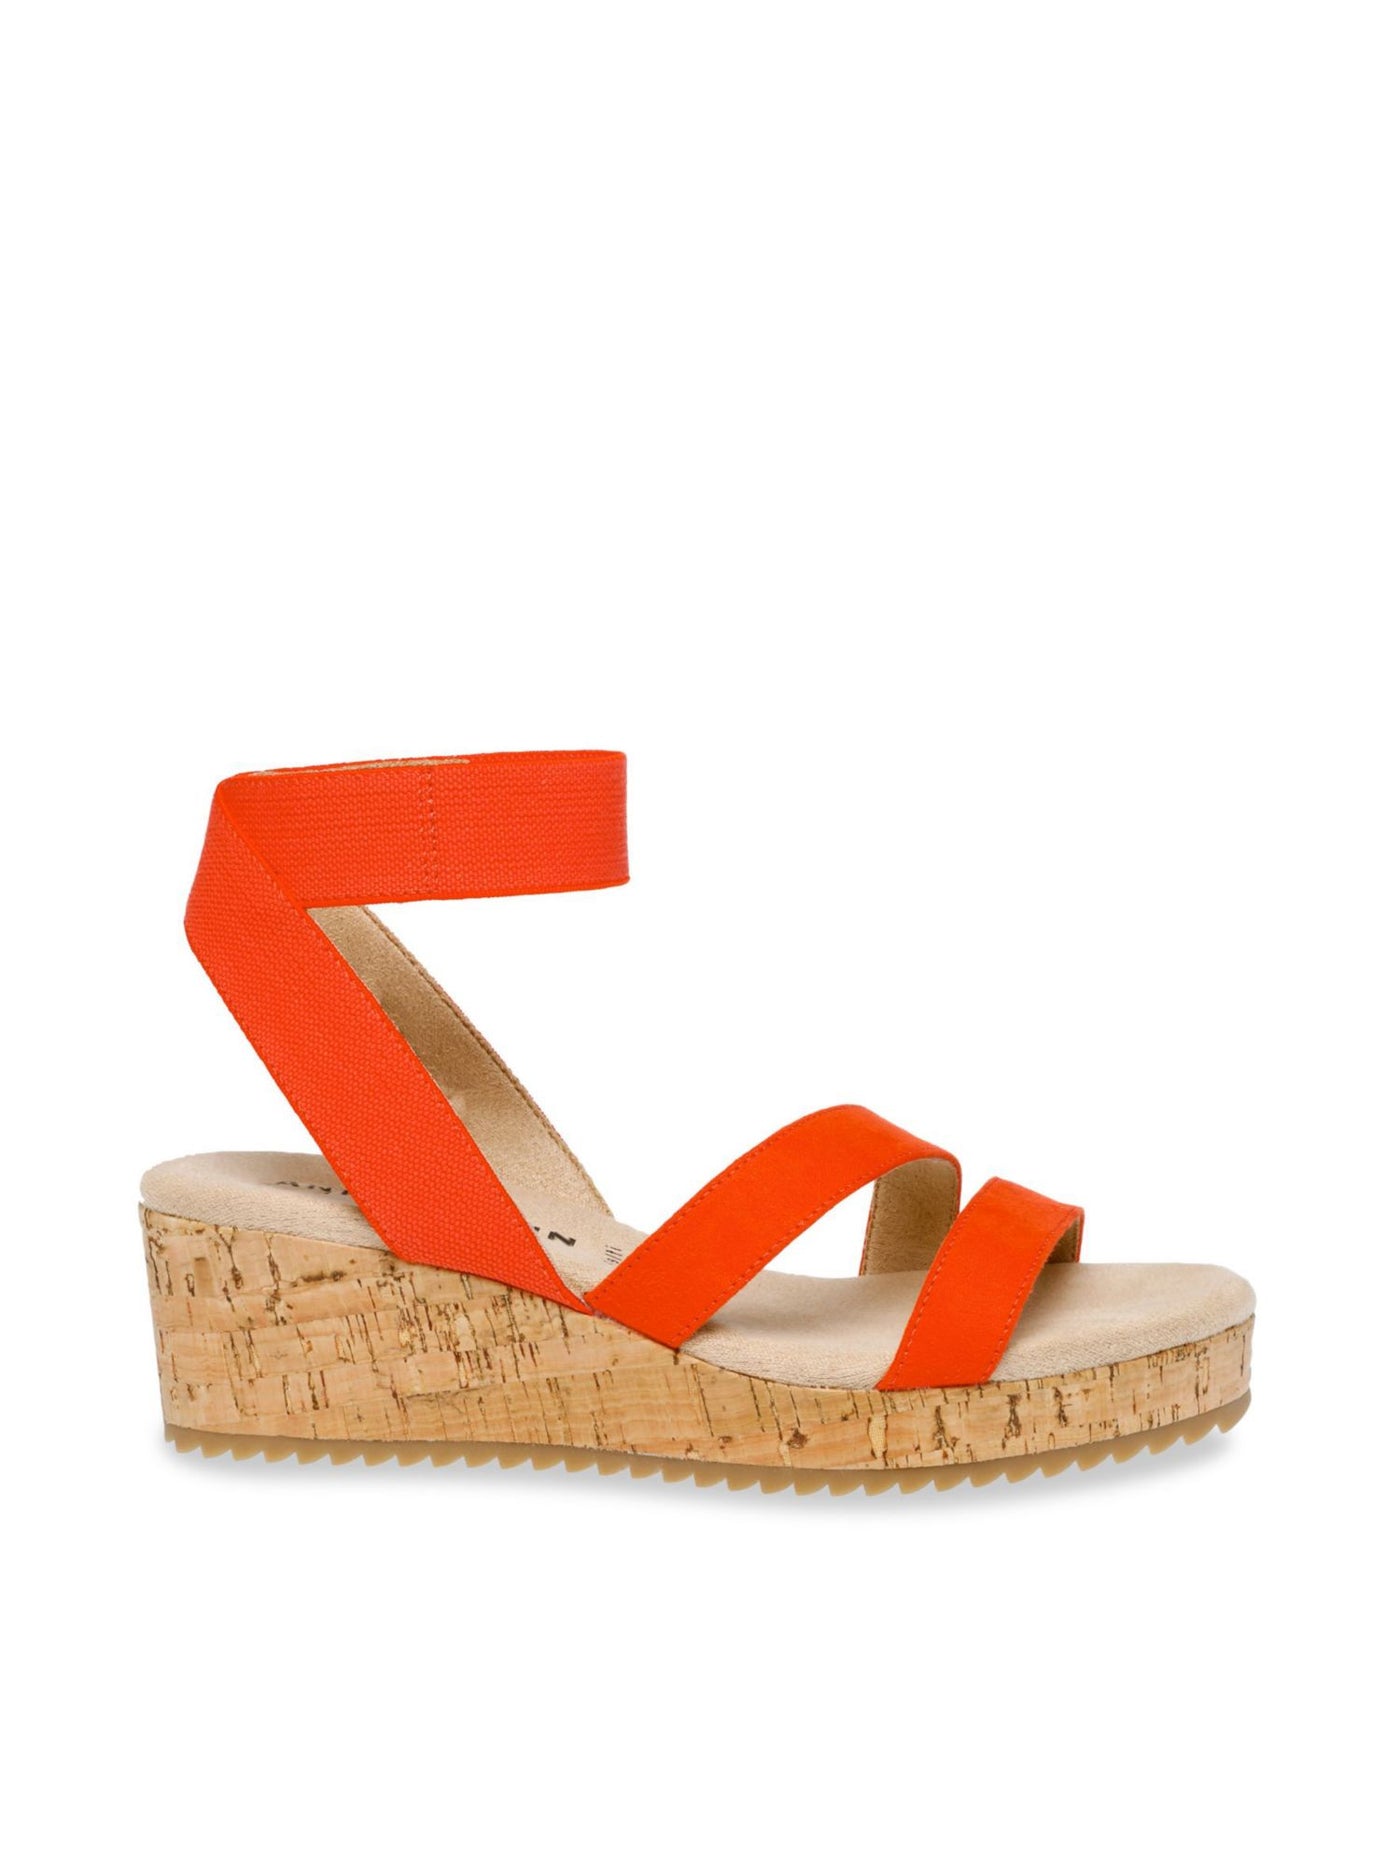 ANNE KLEIN Womens Orange 1" Platform Padded Alyson Open Toe Wedge Slip On Espadrille Shoes 9.5 M